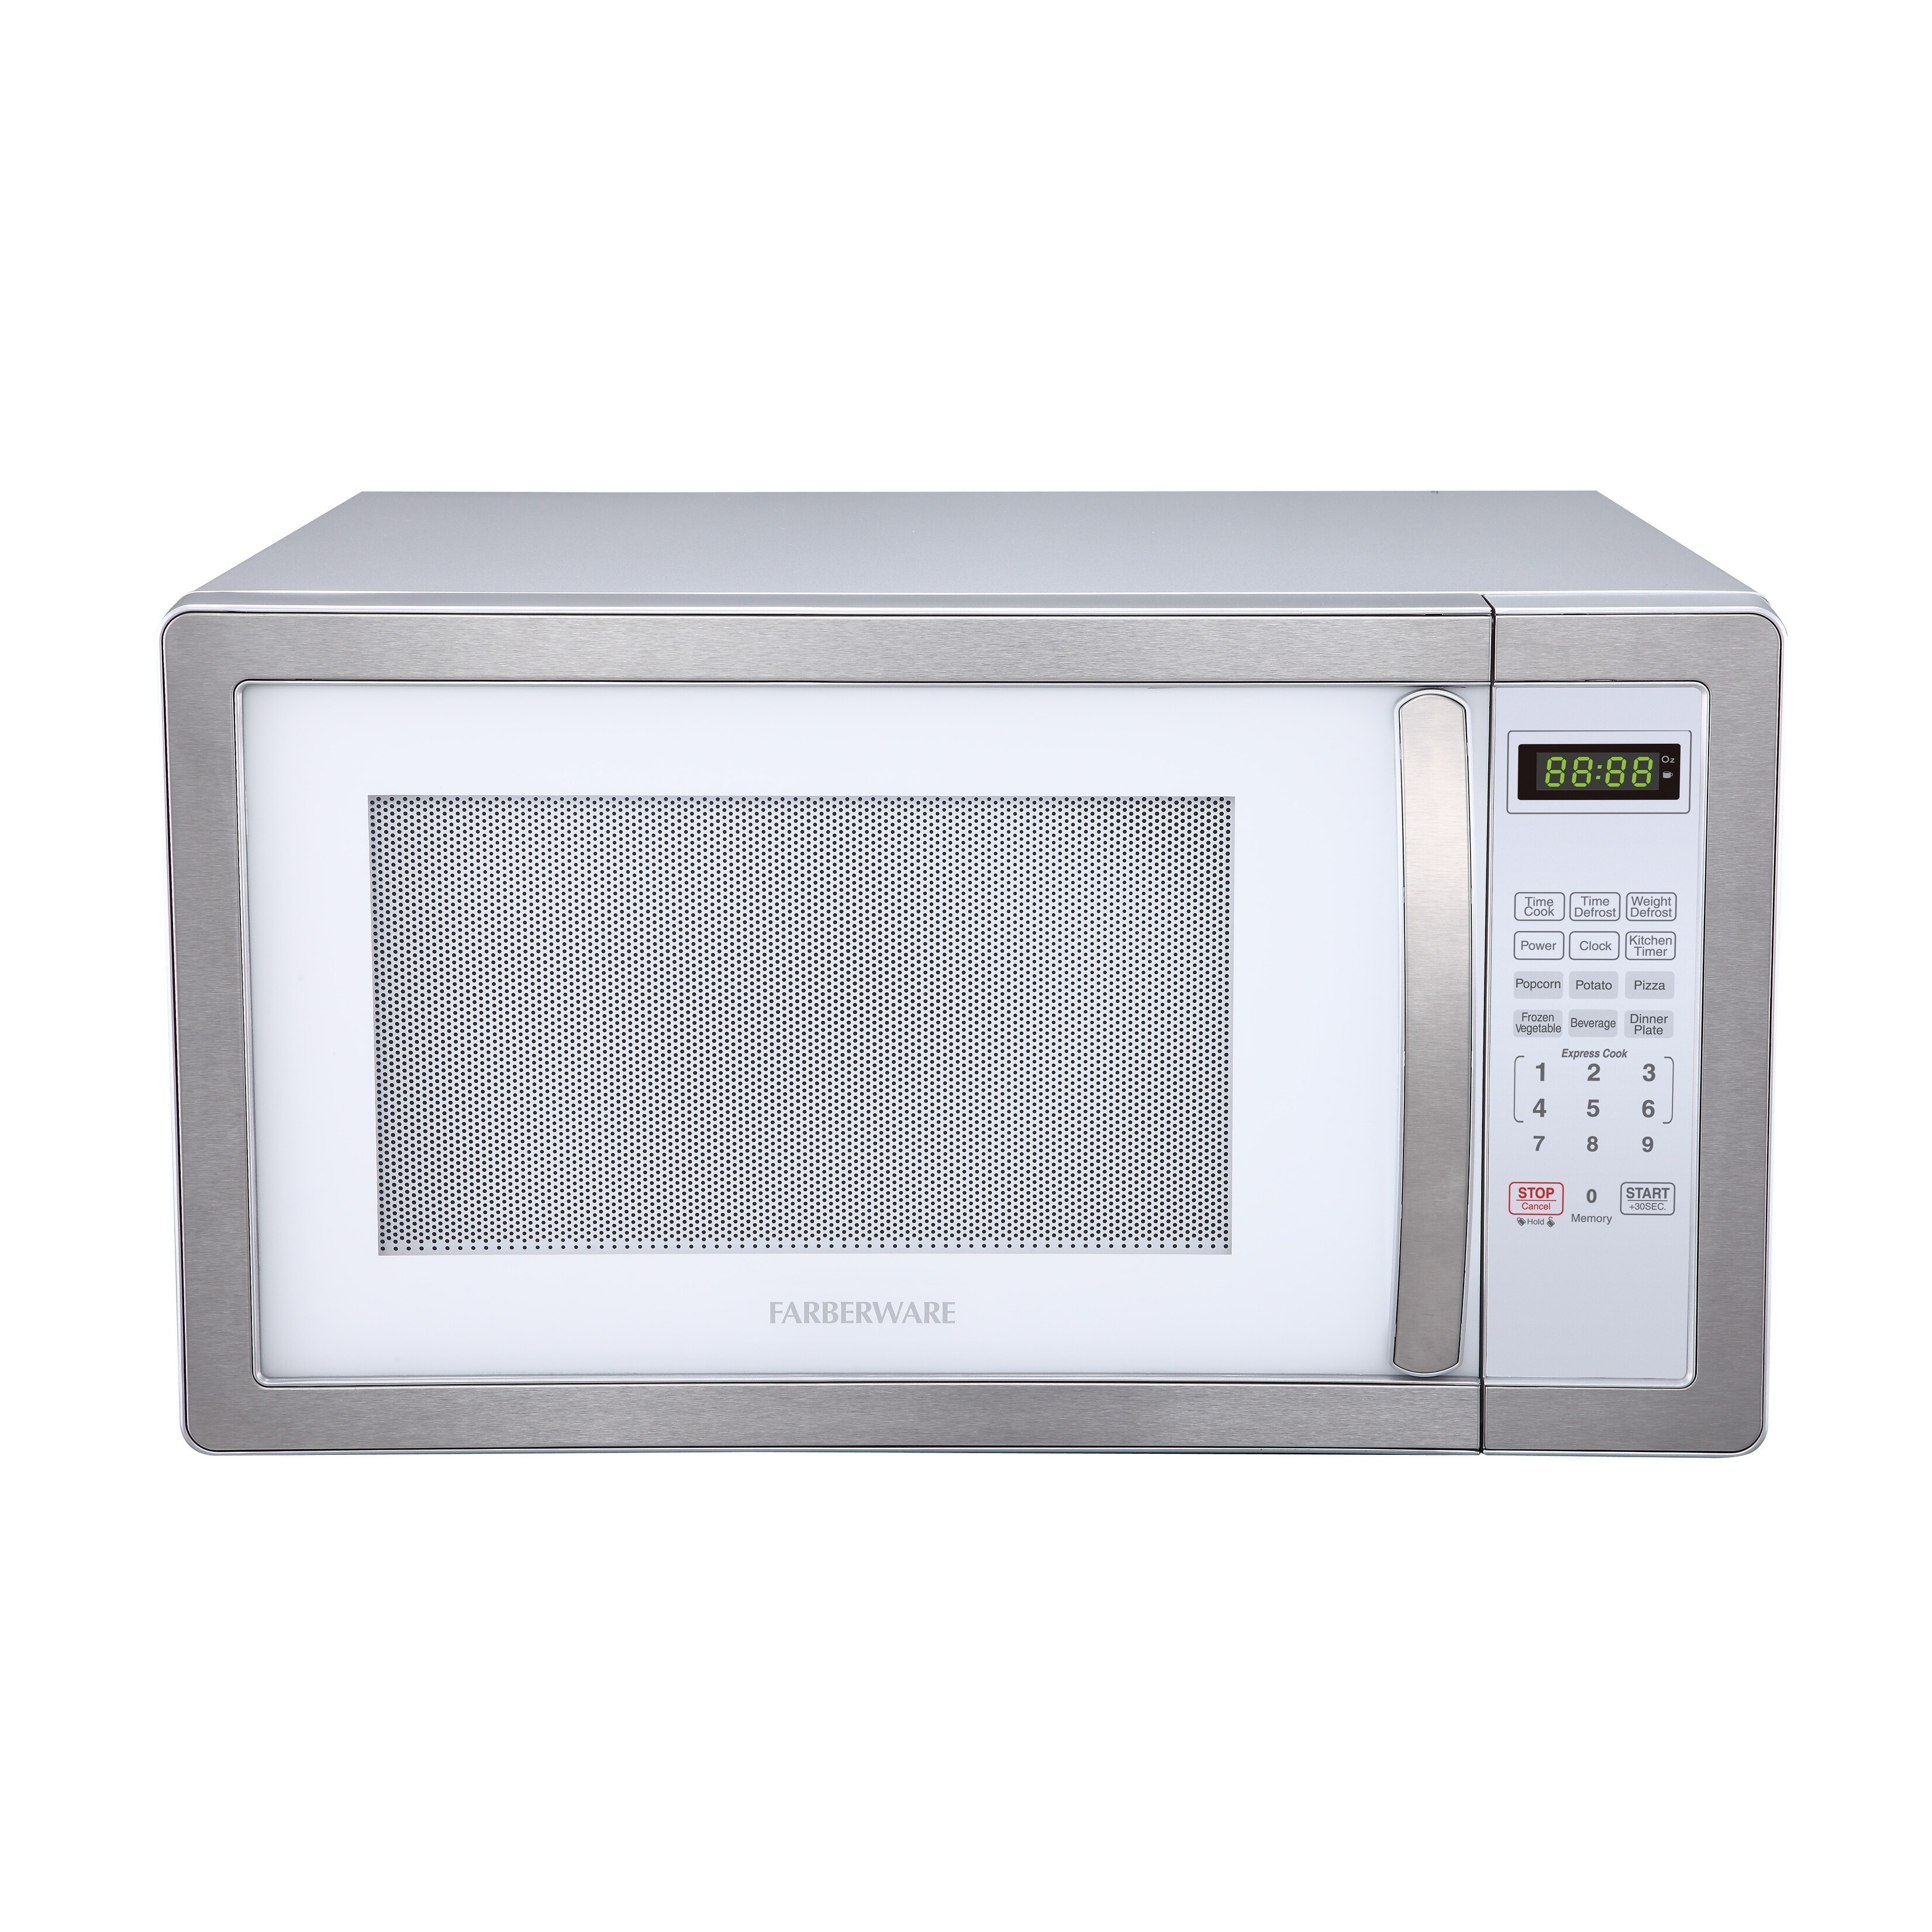 https://ak1.ostkcdn.com/images/products/29057716/Farberware-Classic-1.1-Cu.-Ft.-1000-Watt-Microwave-Oven-8892f4de-5268-4ae8-9000-e08cd1e5a49d.jpg